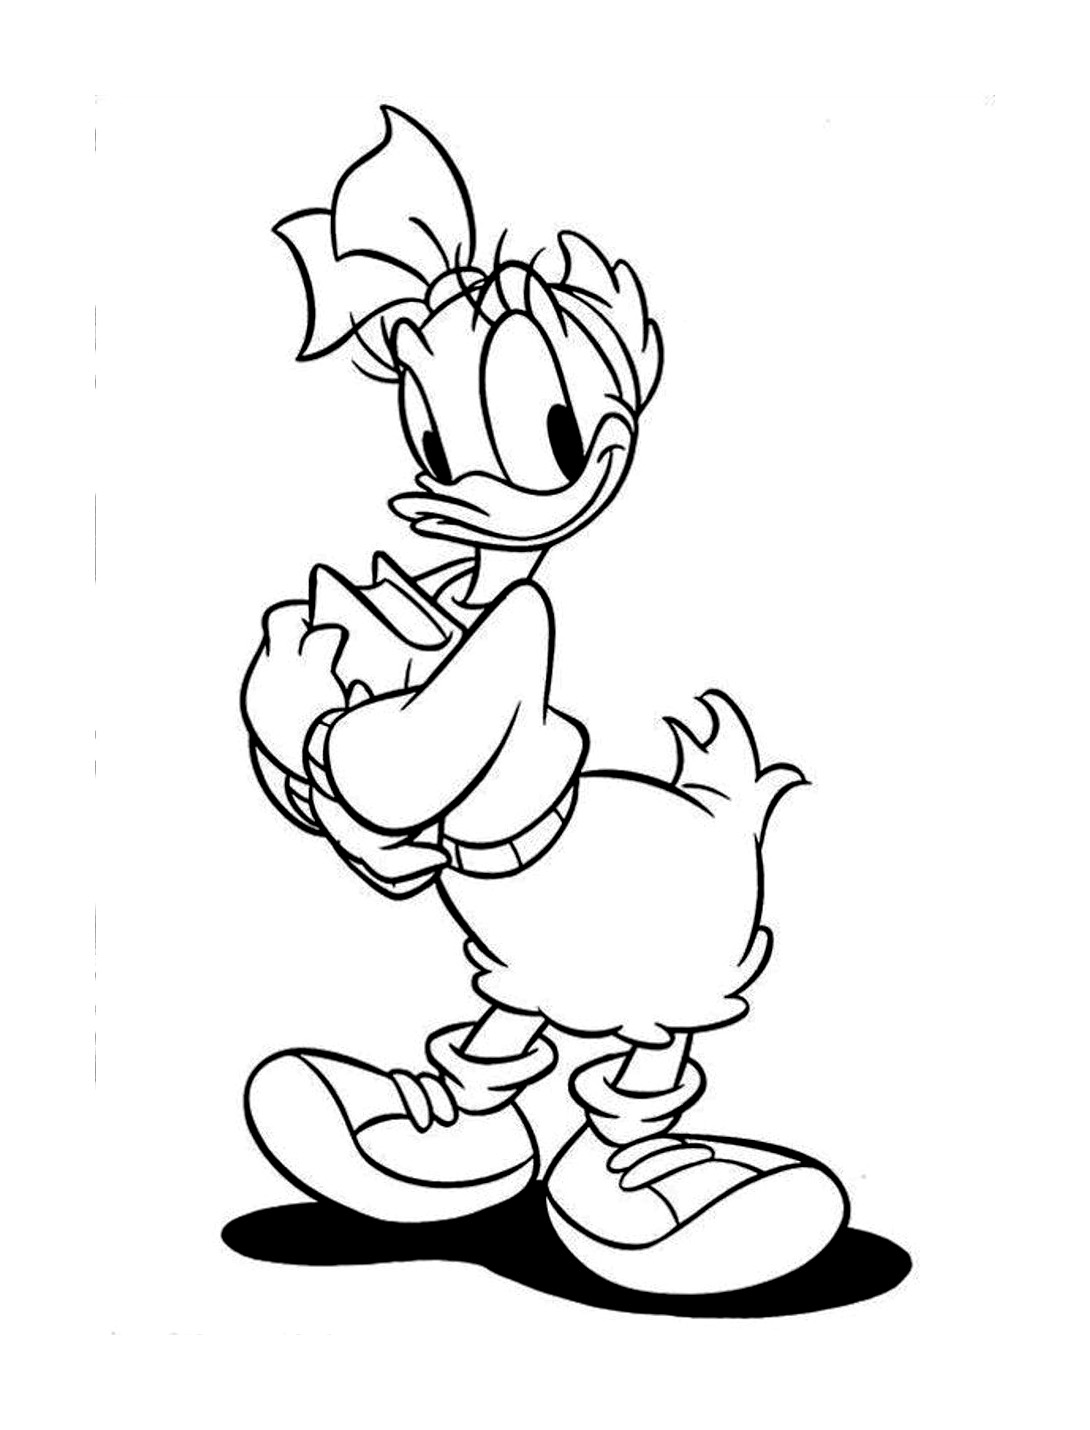 Donald Duck Cartoon Drawing at GetDrawings | Free download